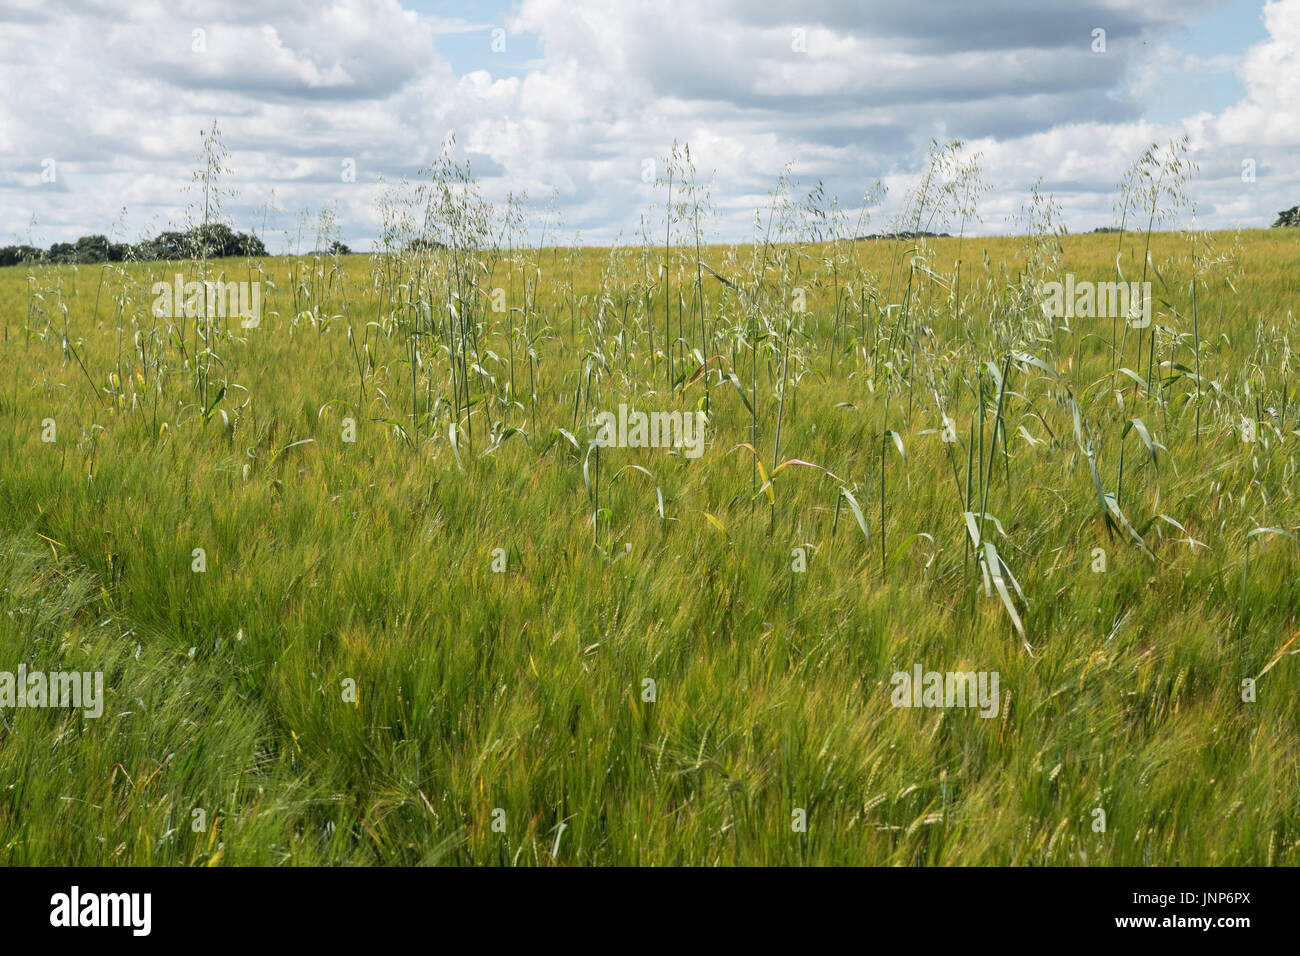 Wild Oats in a field of Barley Stock Photo